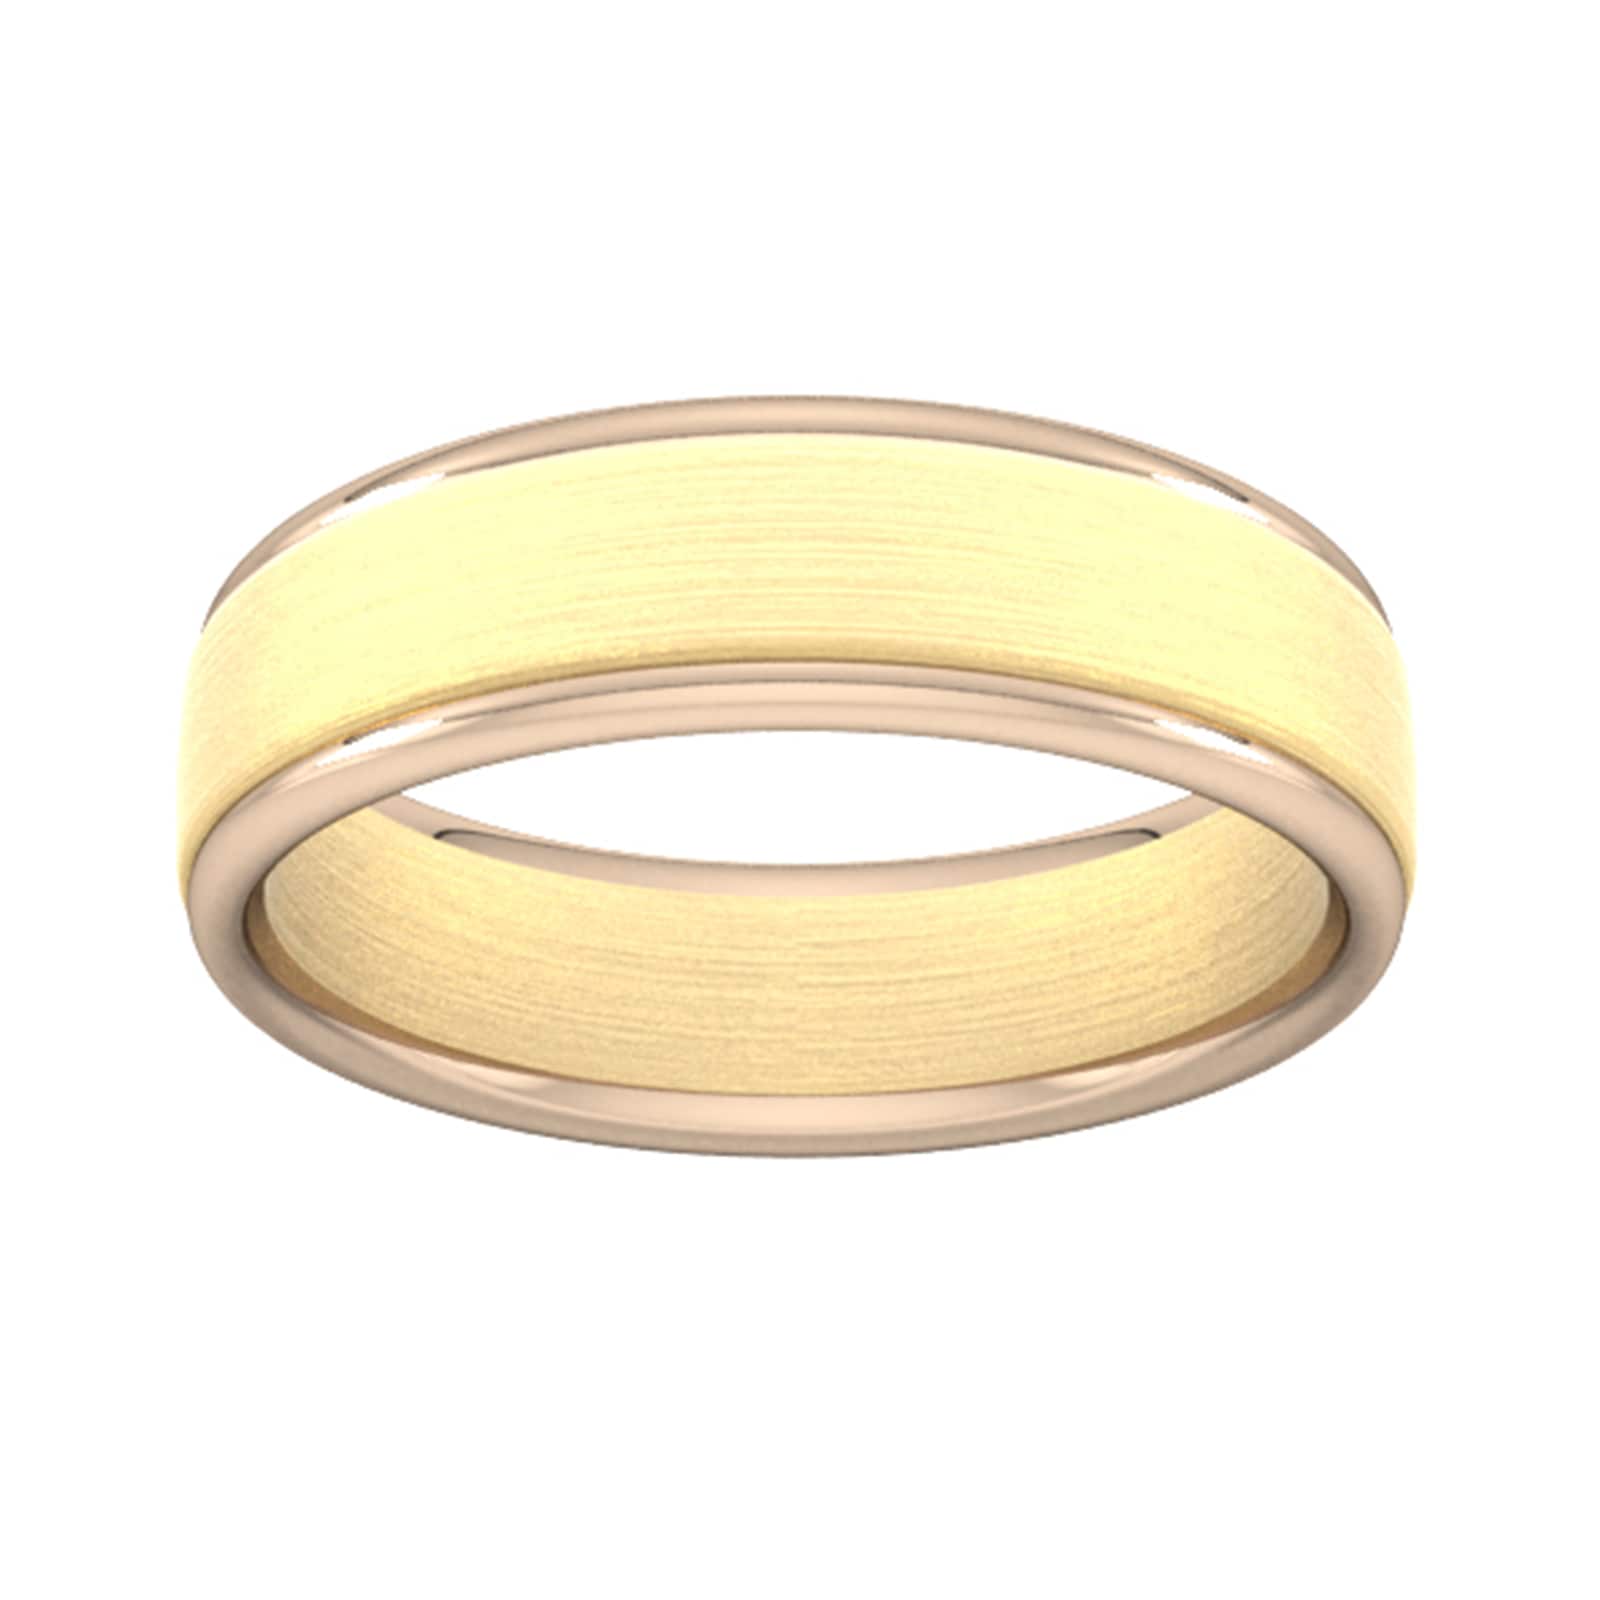 6mm Wedding Ring In 9 Carat Yellow & Rose Gold - Ring Size Q